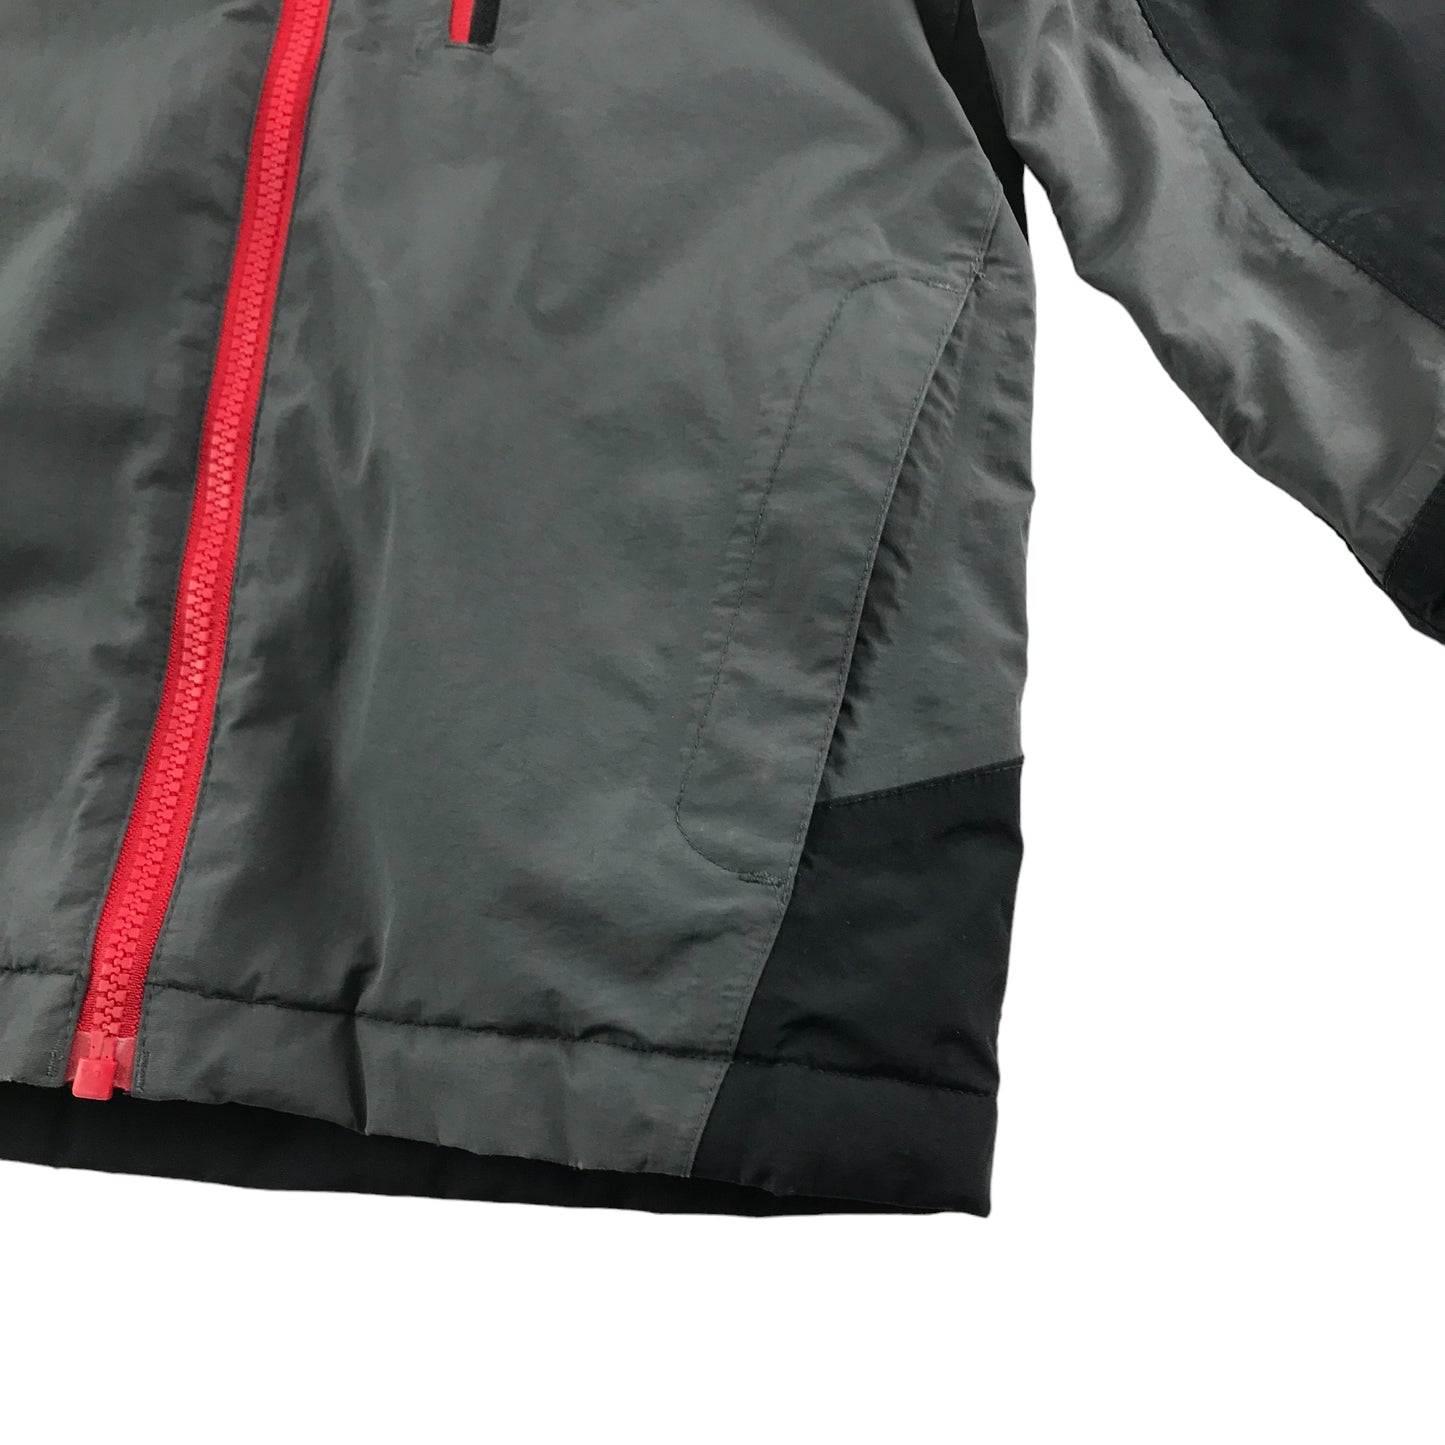 Berghaus Jacket Age 5 Grey Warm Padded with Hood